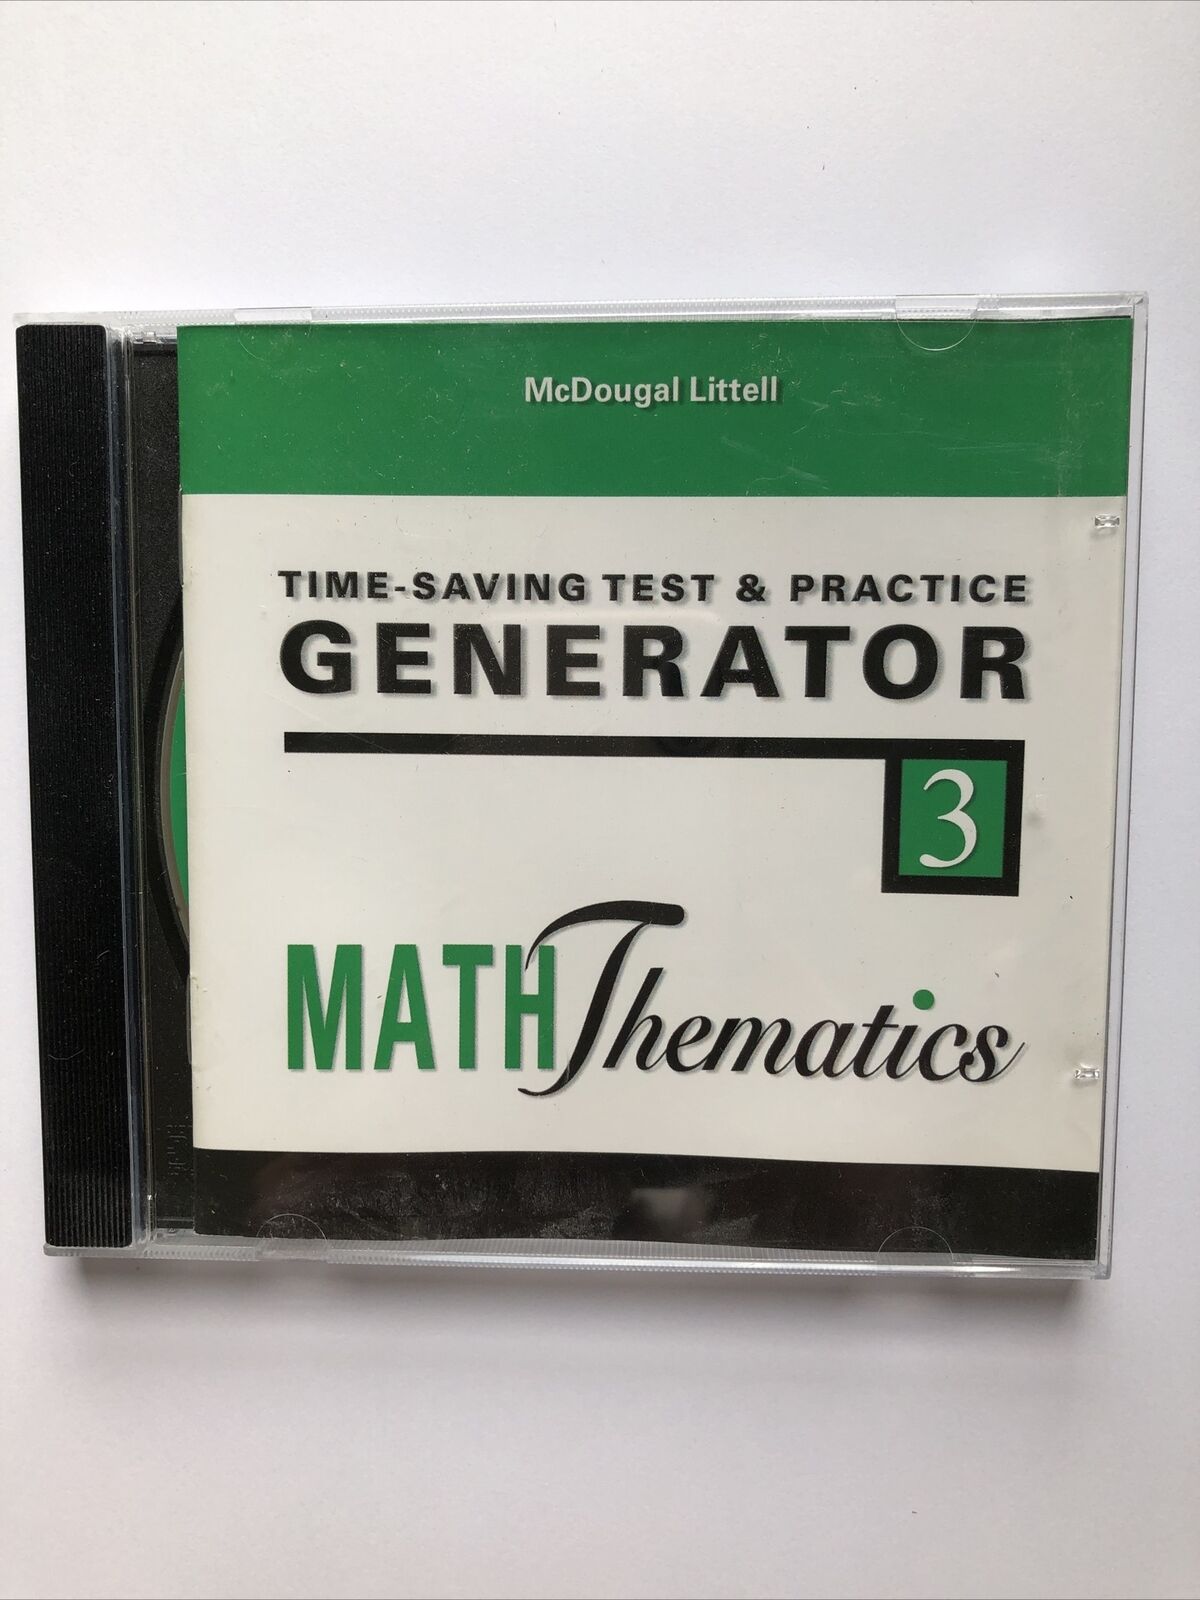 McDougal Littell Test & Practice Generator Math Thematics Book 3 CD-ROM